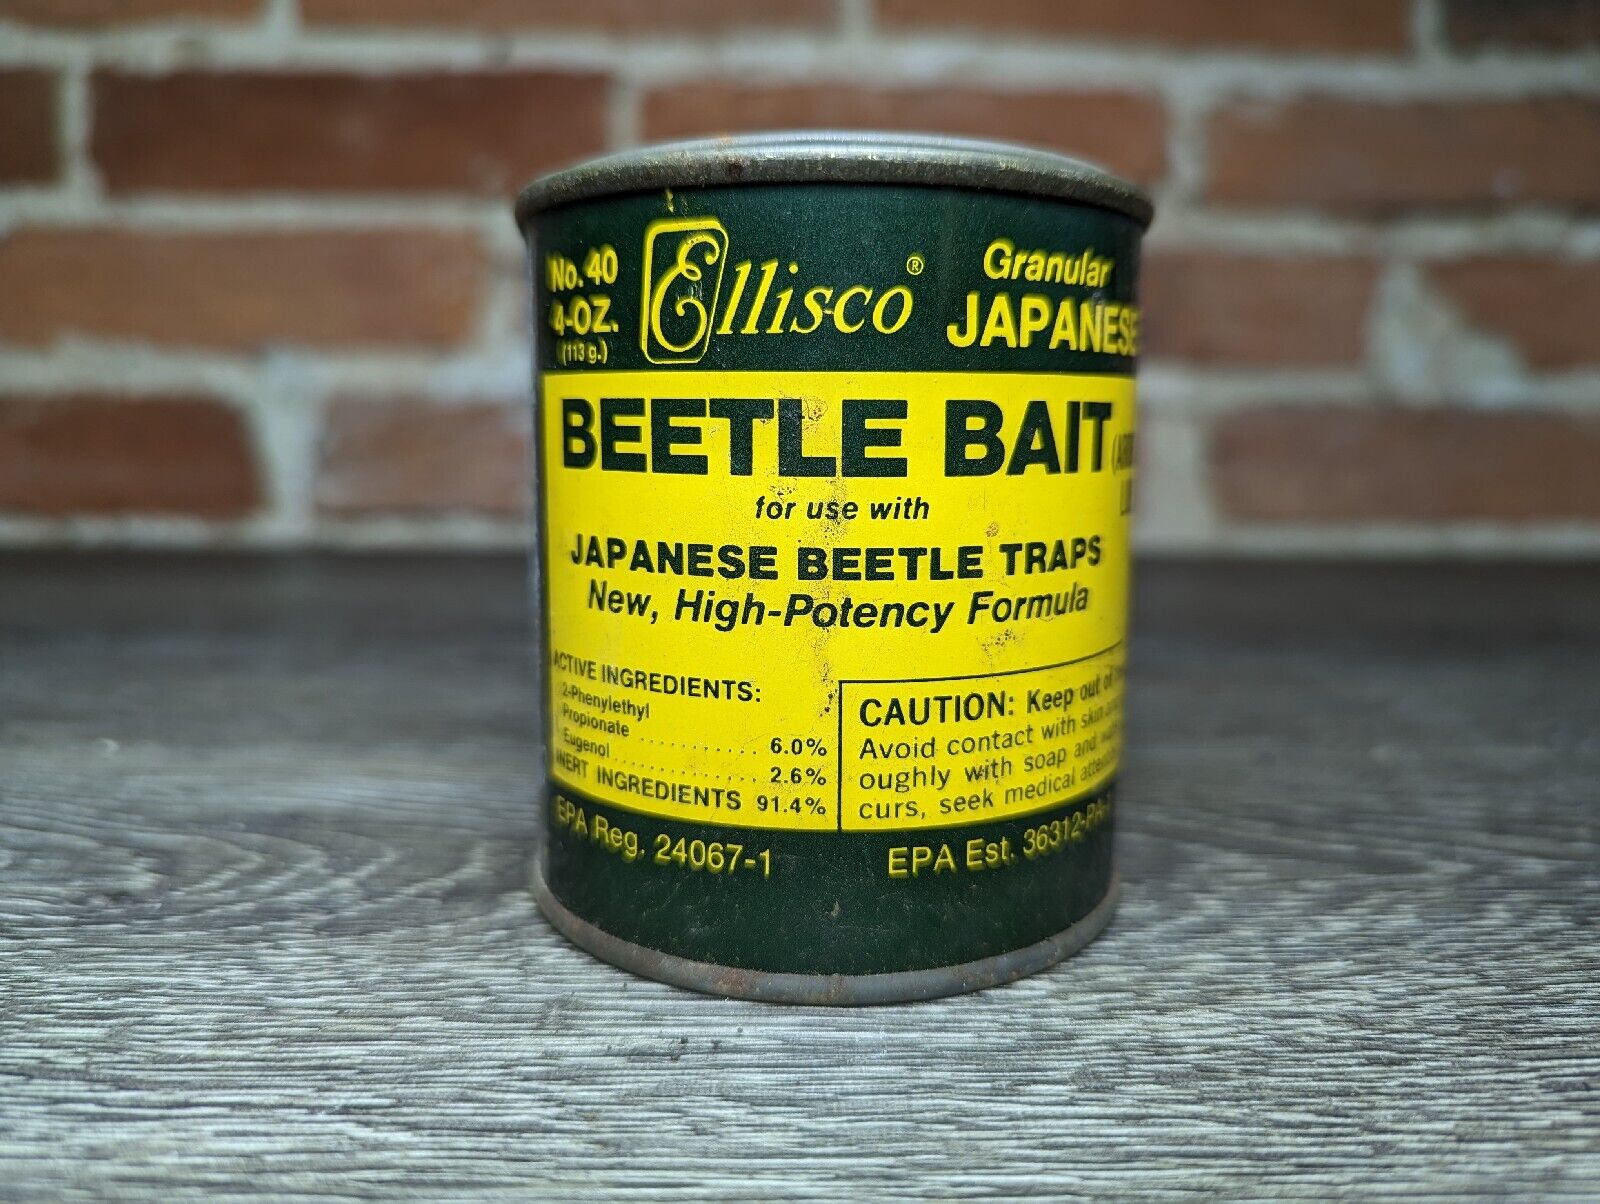 VINTAGE ELLISCO #40 BEETLE BAIT AROMATIC LURE USE IN JAPANESE BEETLE TIN 4OZ CAN